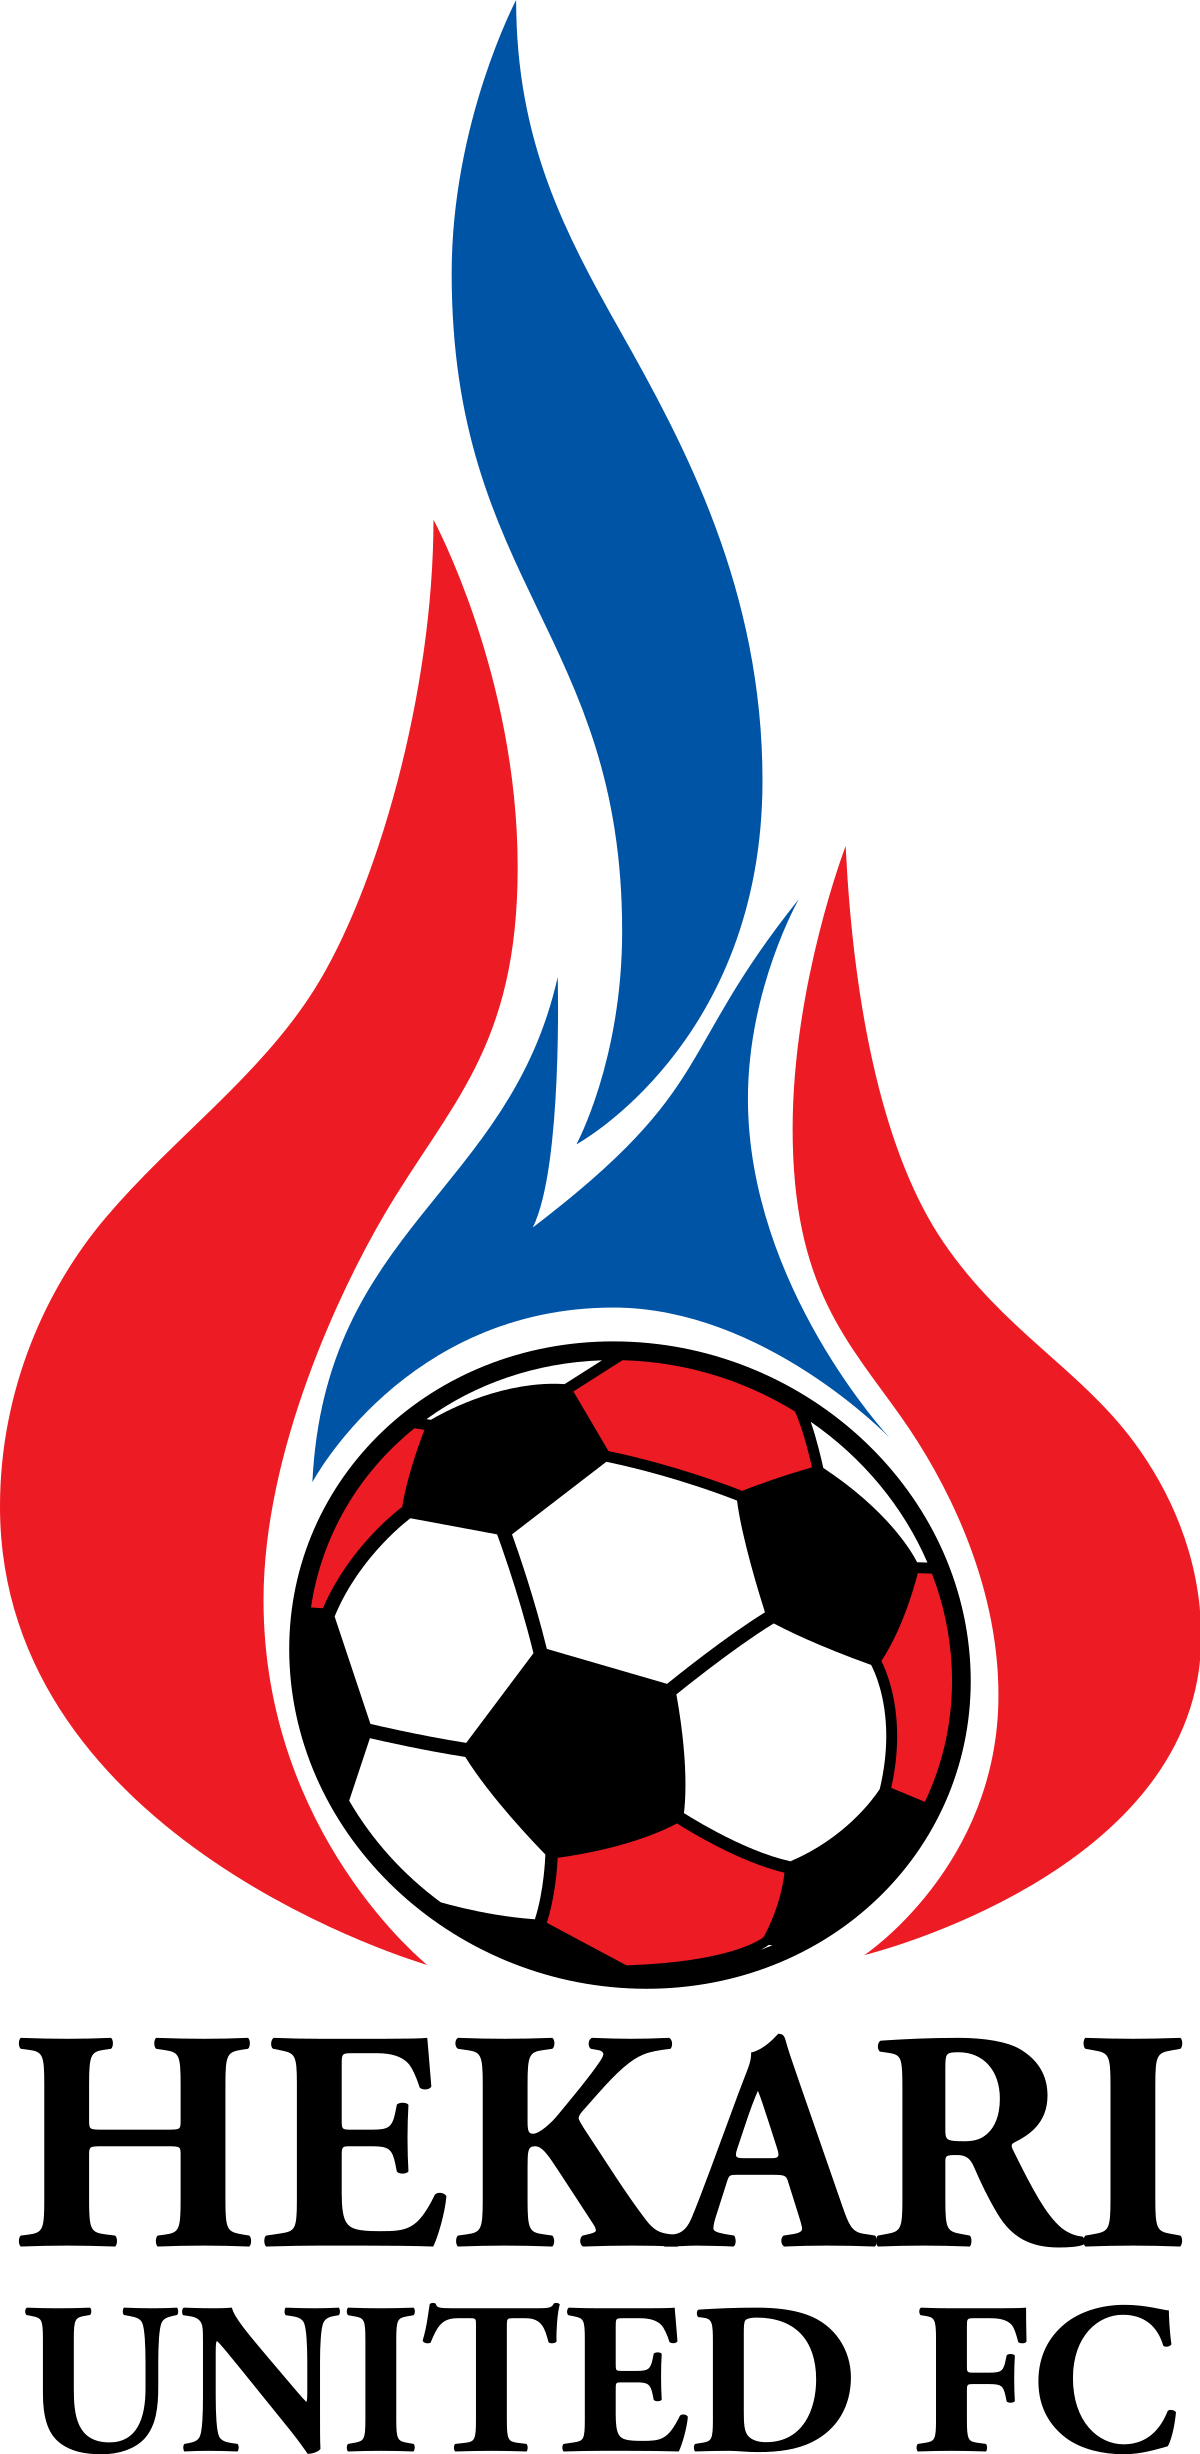 Hekari Utd logo